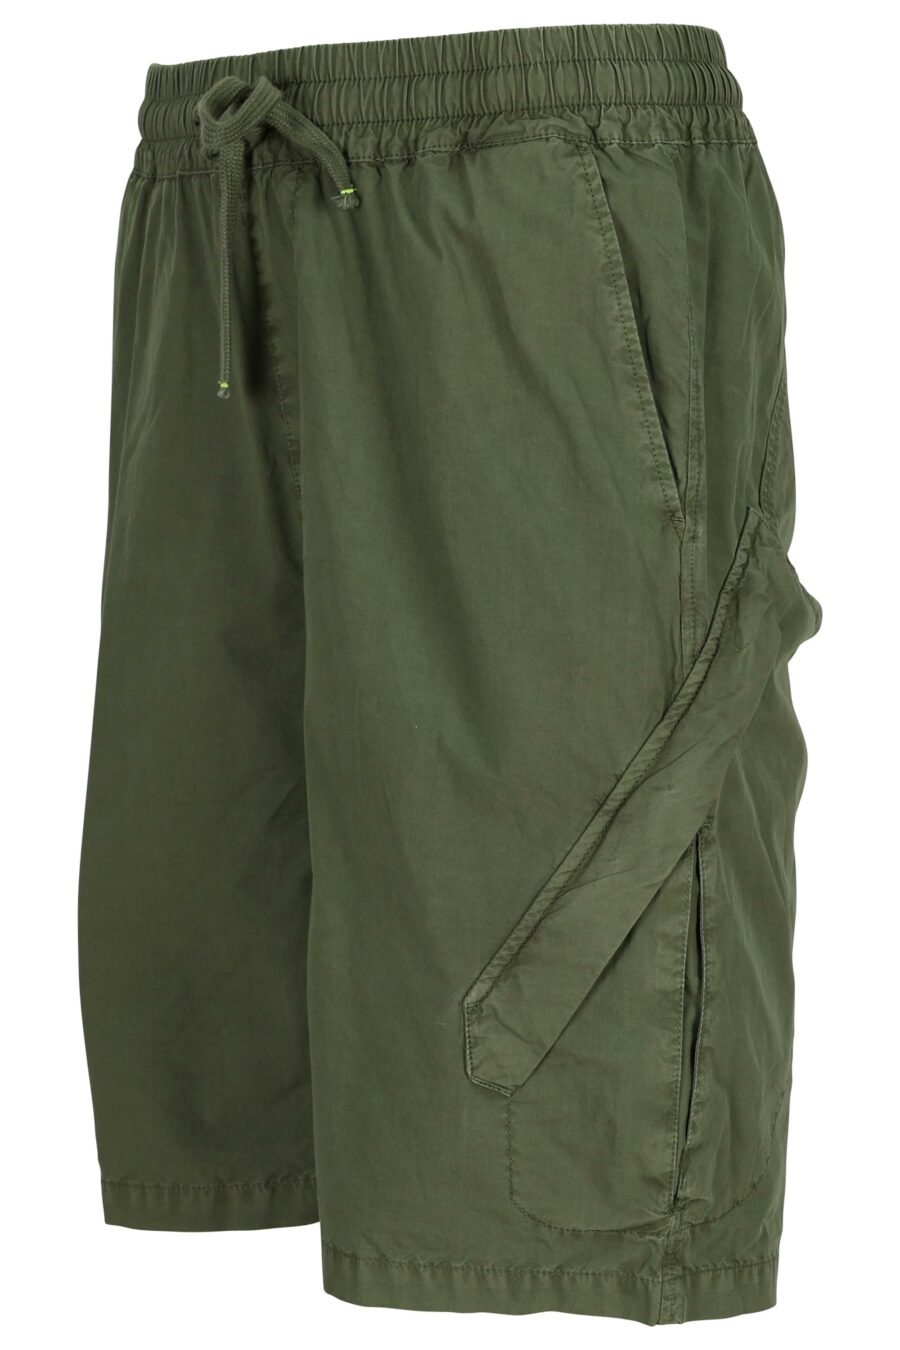 Pantalón verde militar corto con resorte - 8058610775407 1